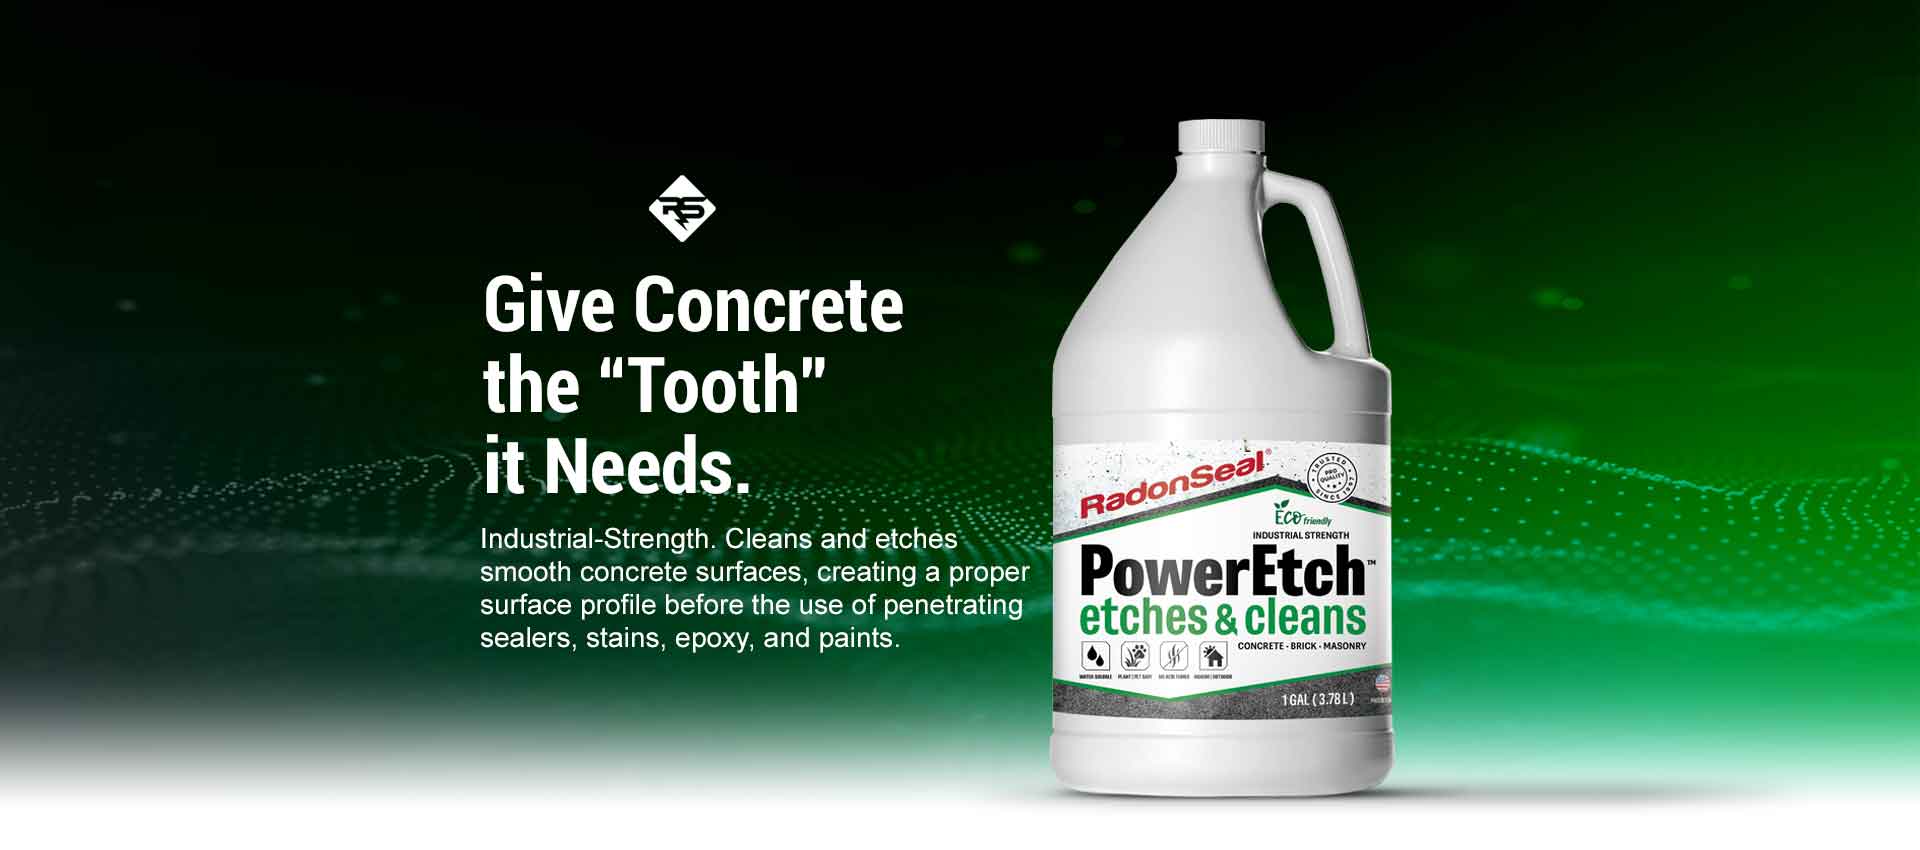 PowerEtch Concrete Etcher & Cleaner by RadonSeal